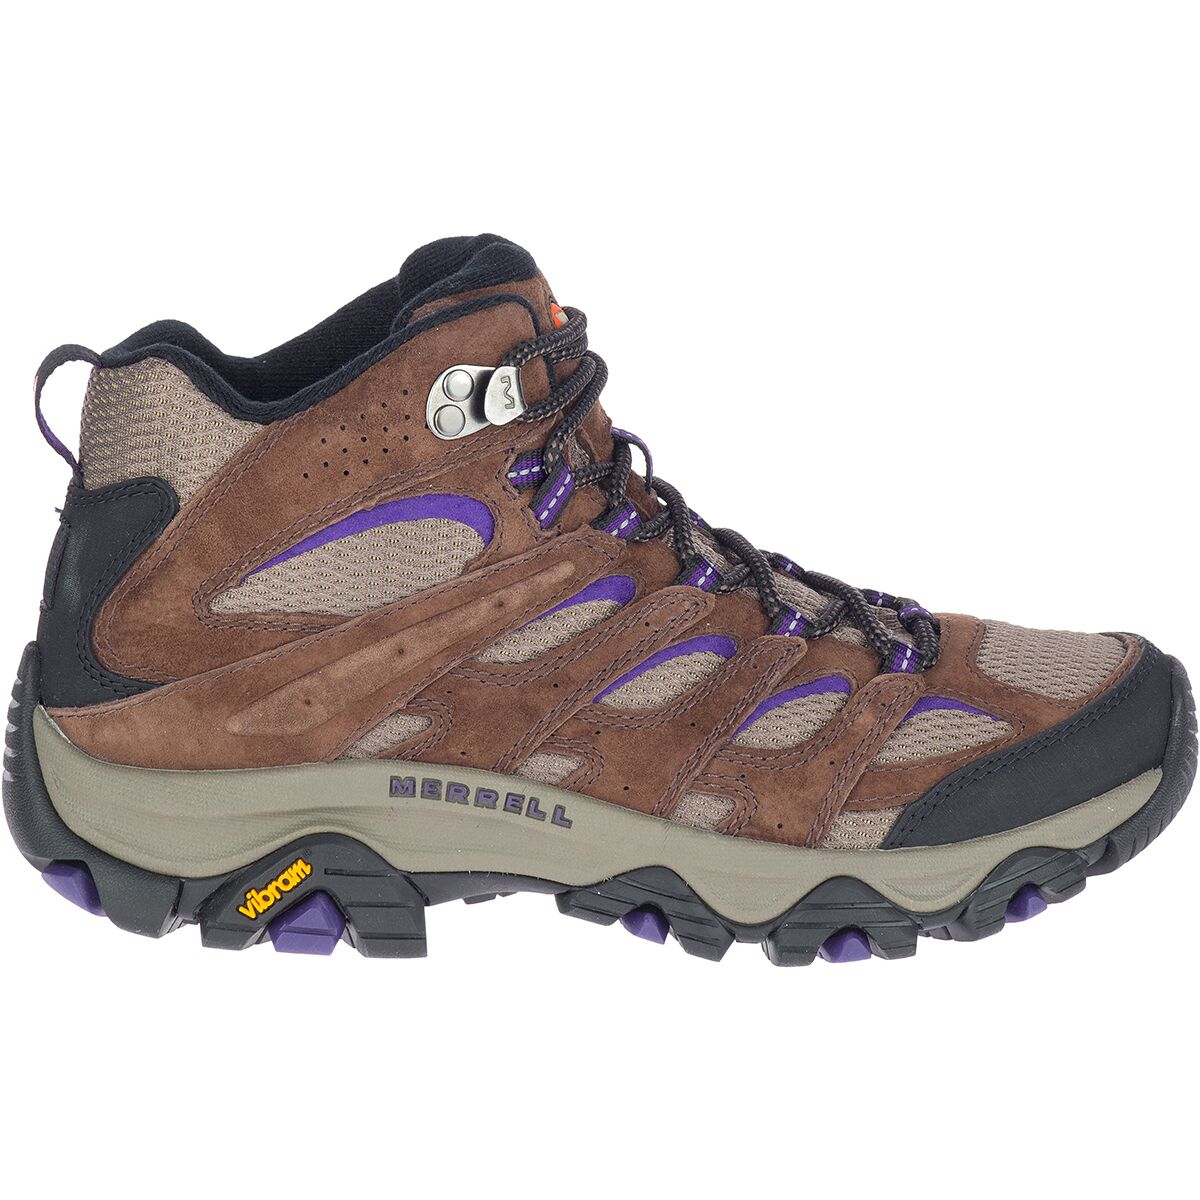 Moab 3 Mid Hiking Boot - Women